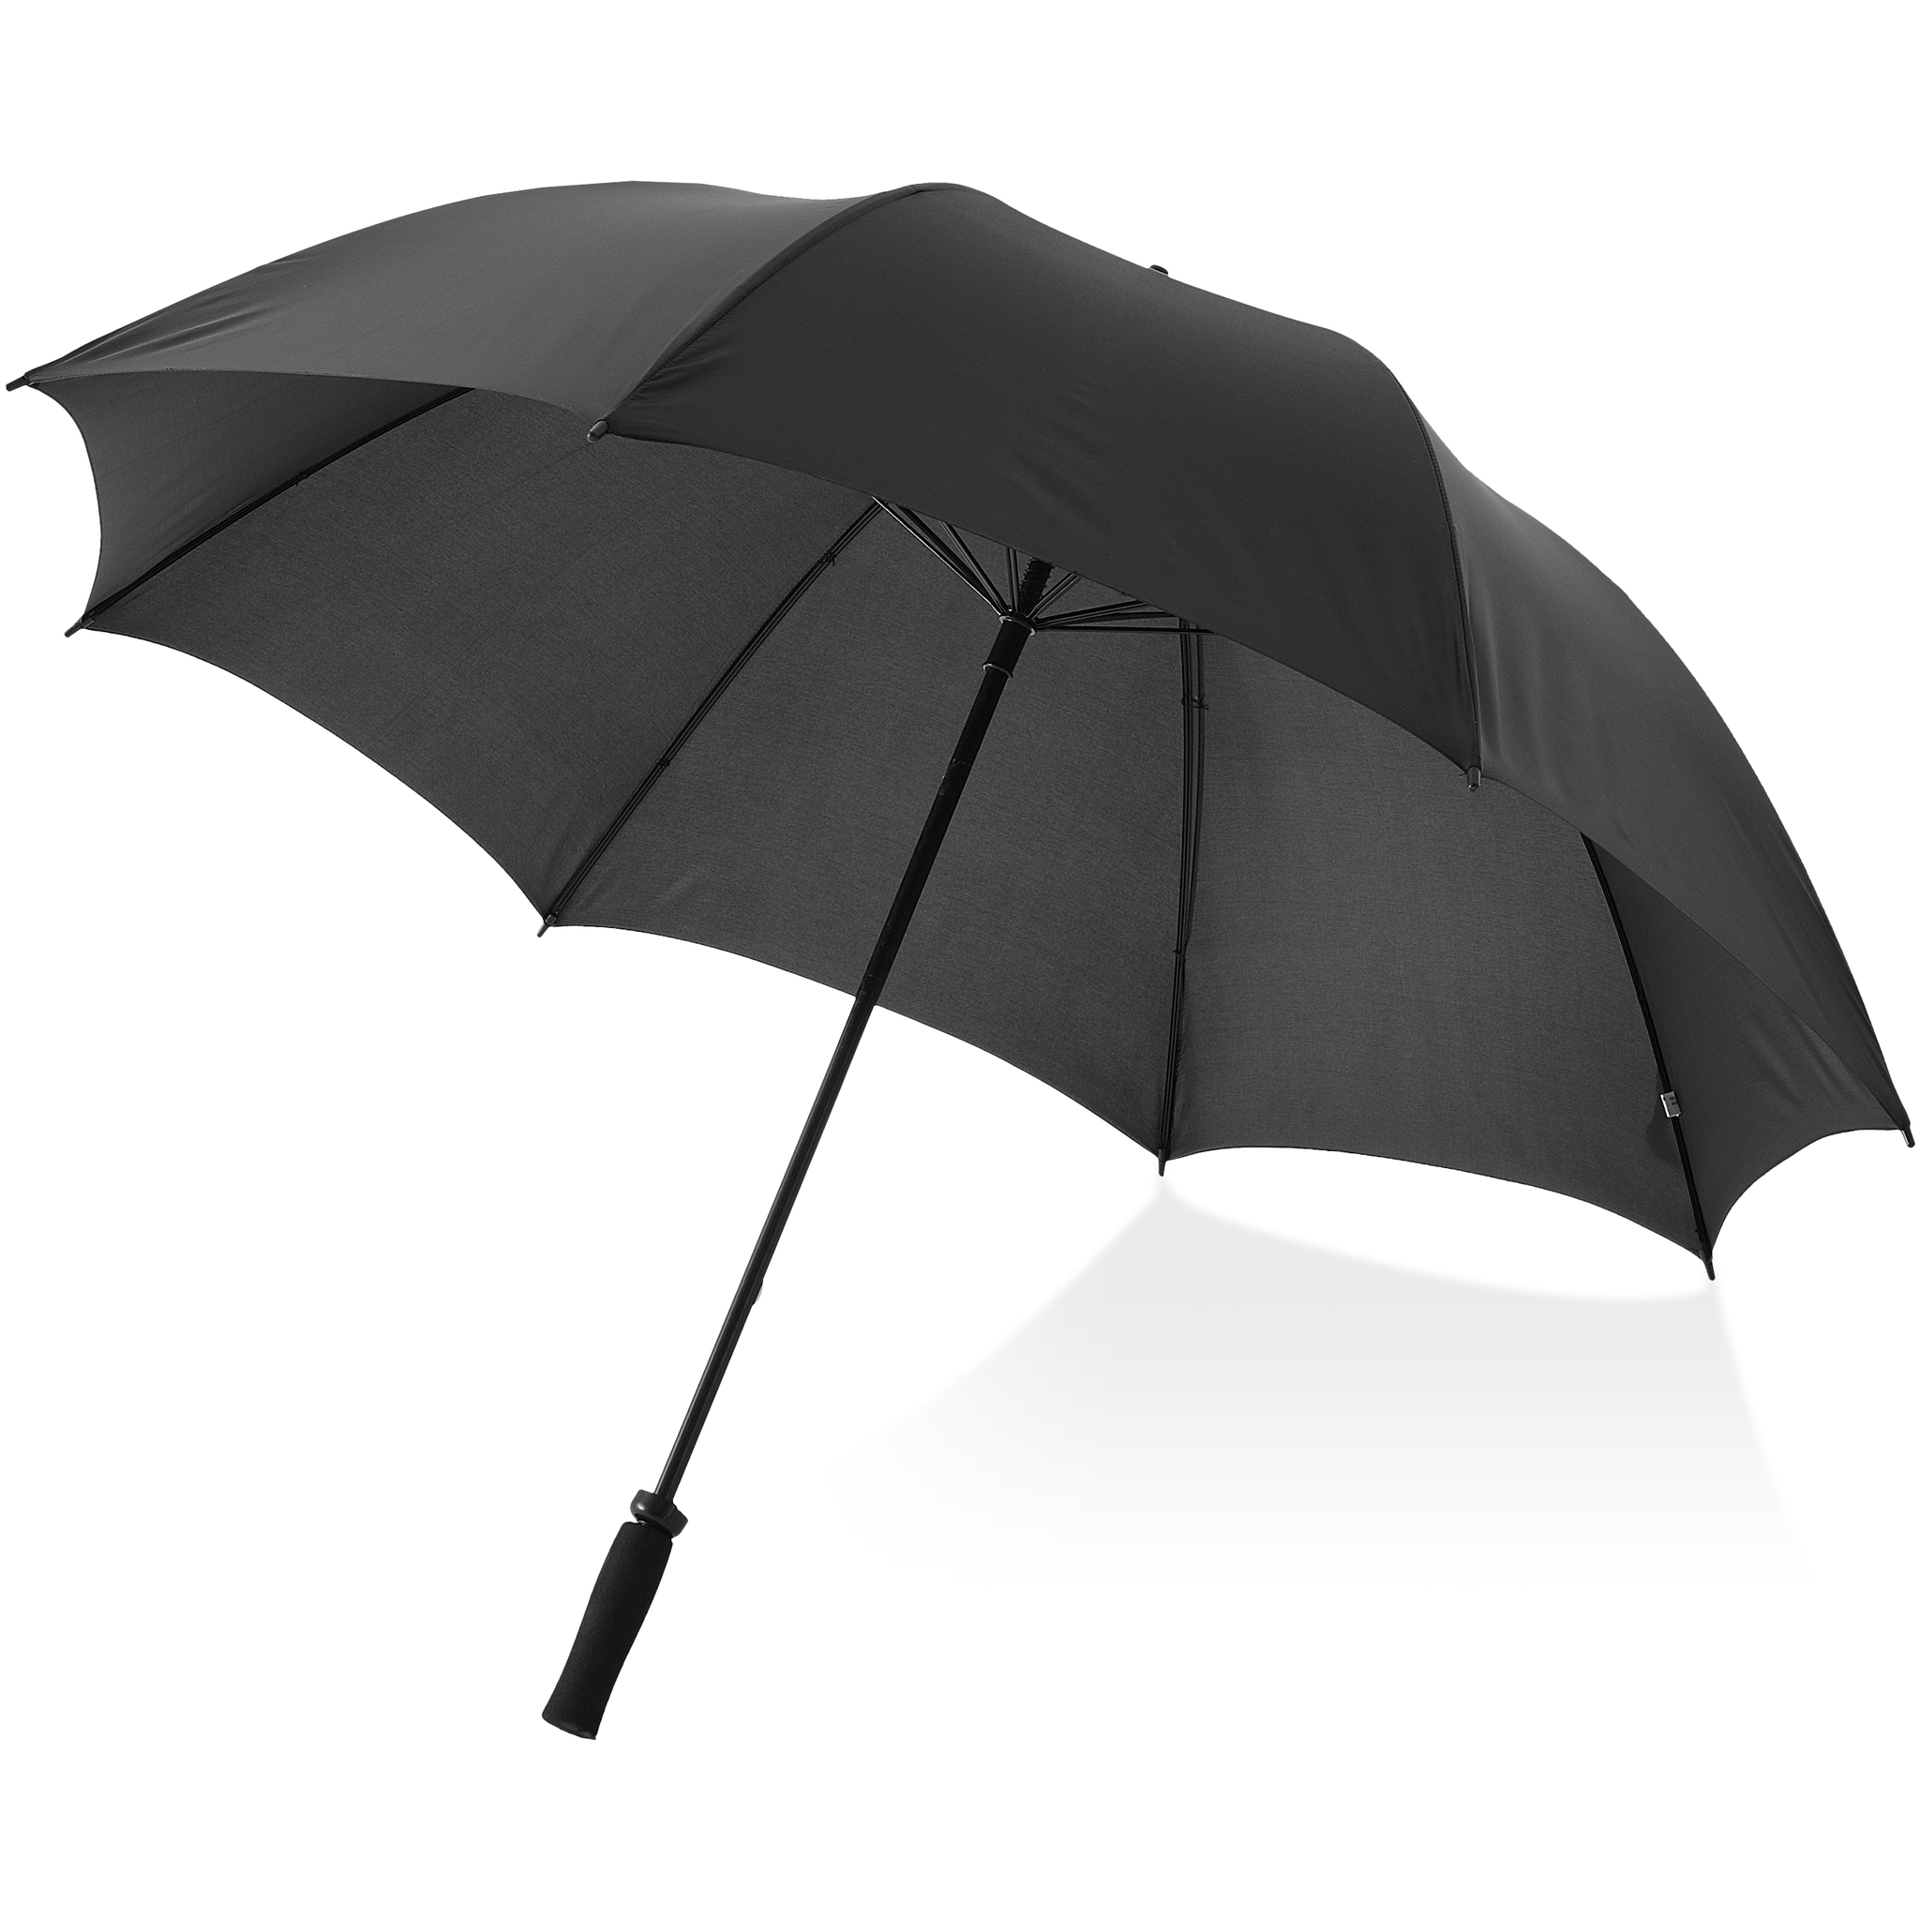 Storm Umbrella in black